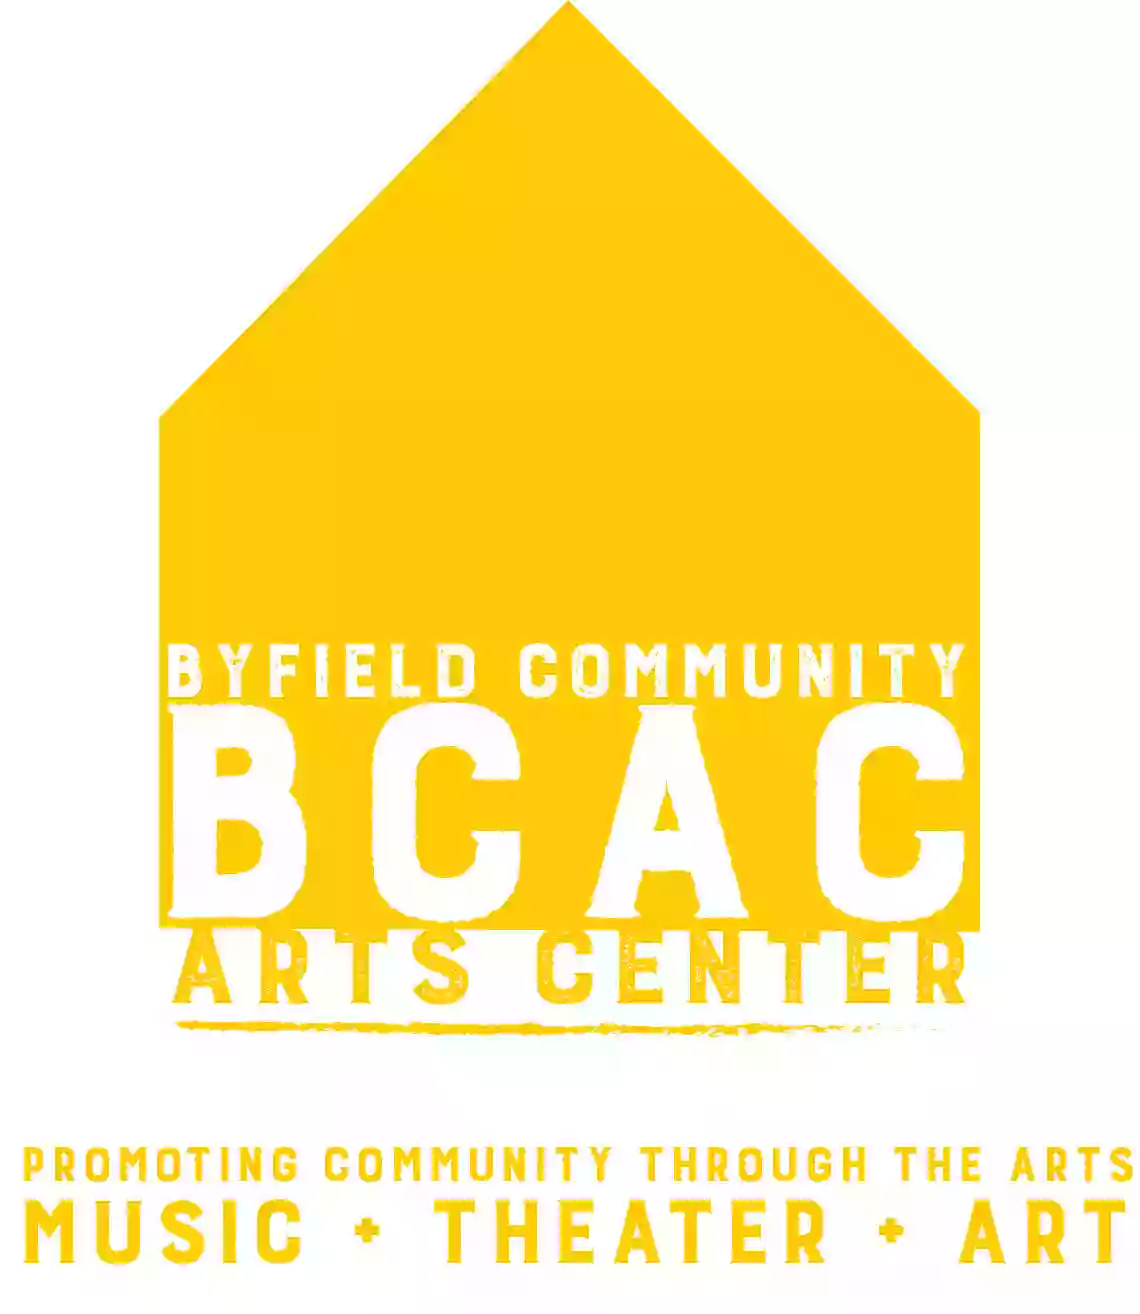 Byfield Community Arts Center